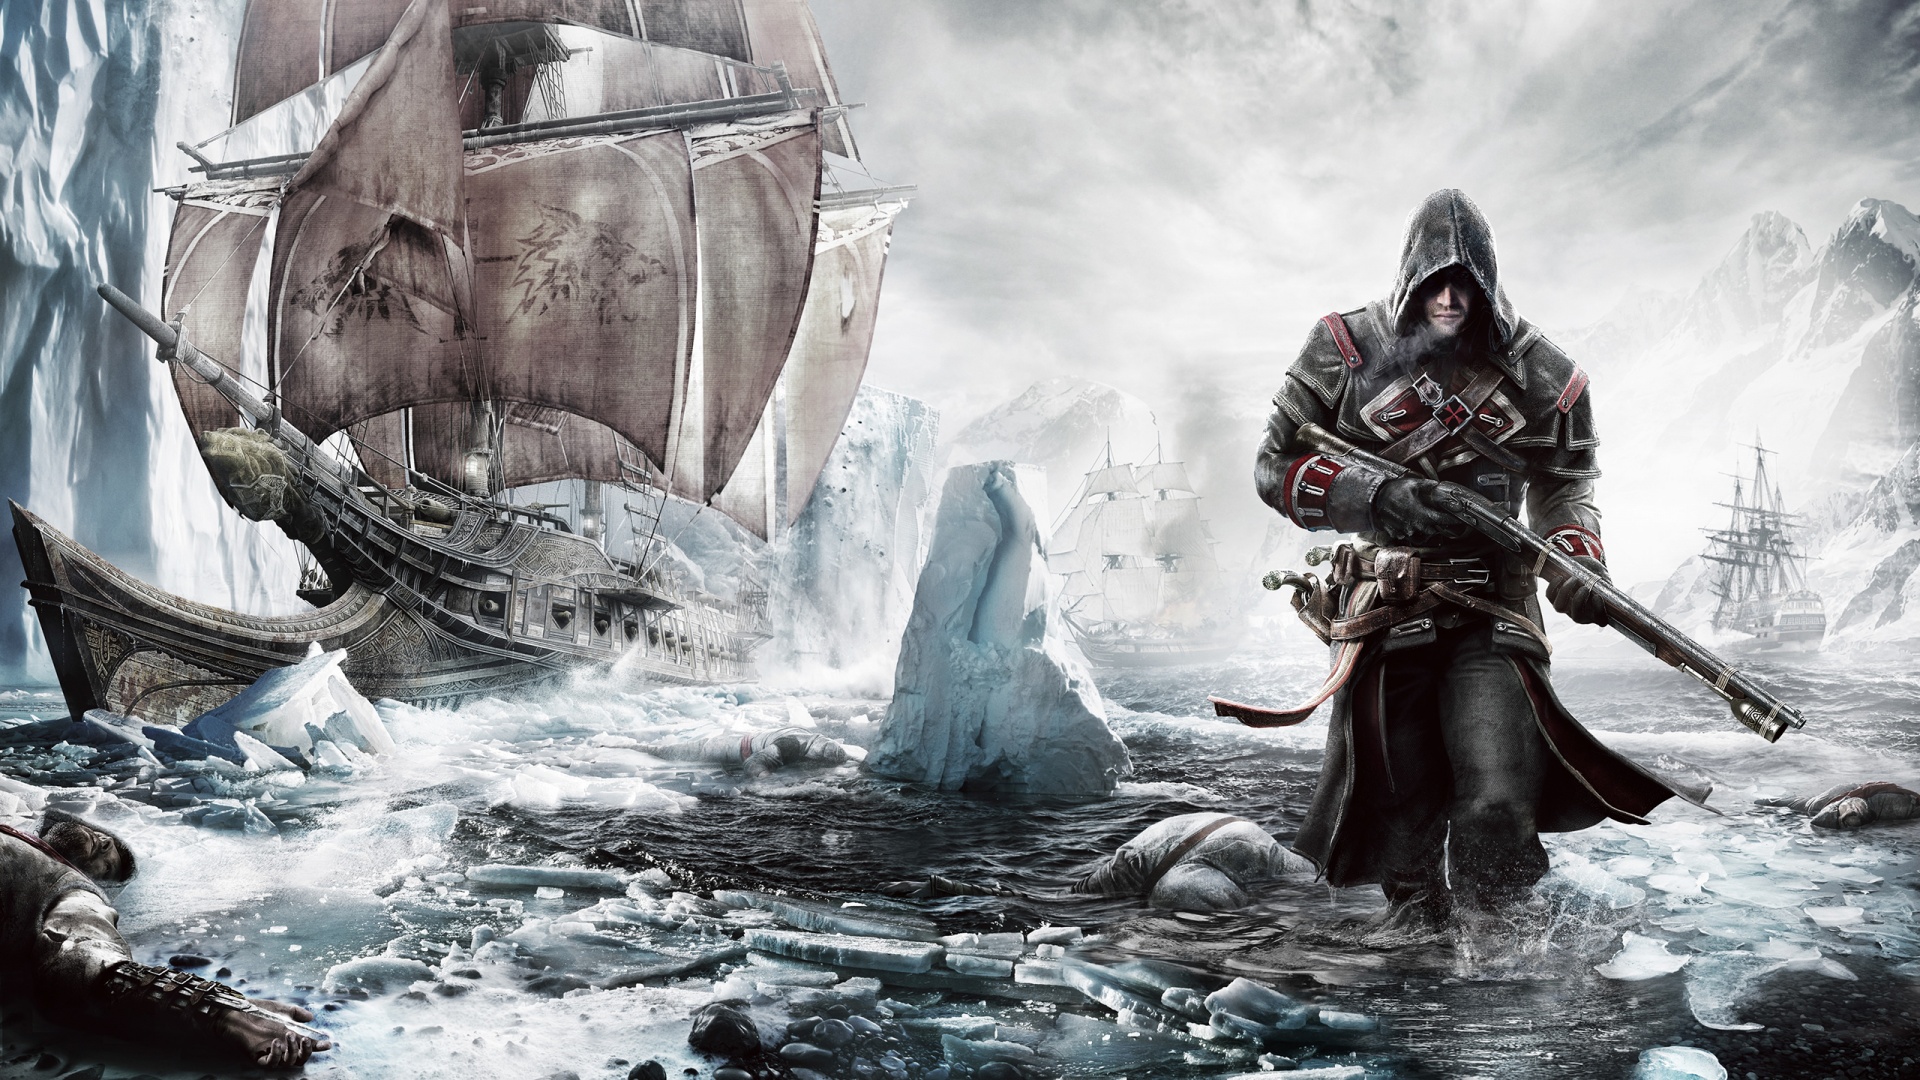 Shipwreck Assassin's Creed Rogue